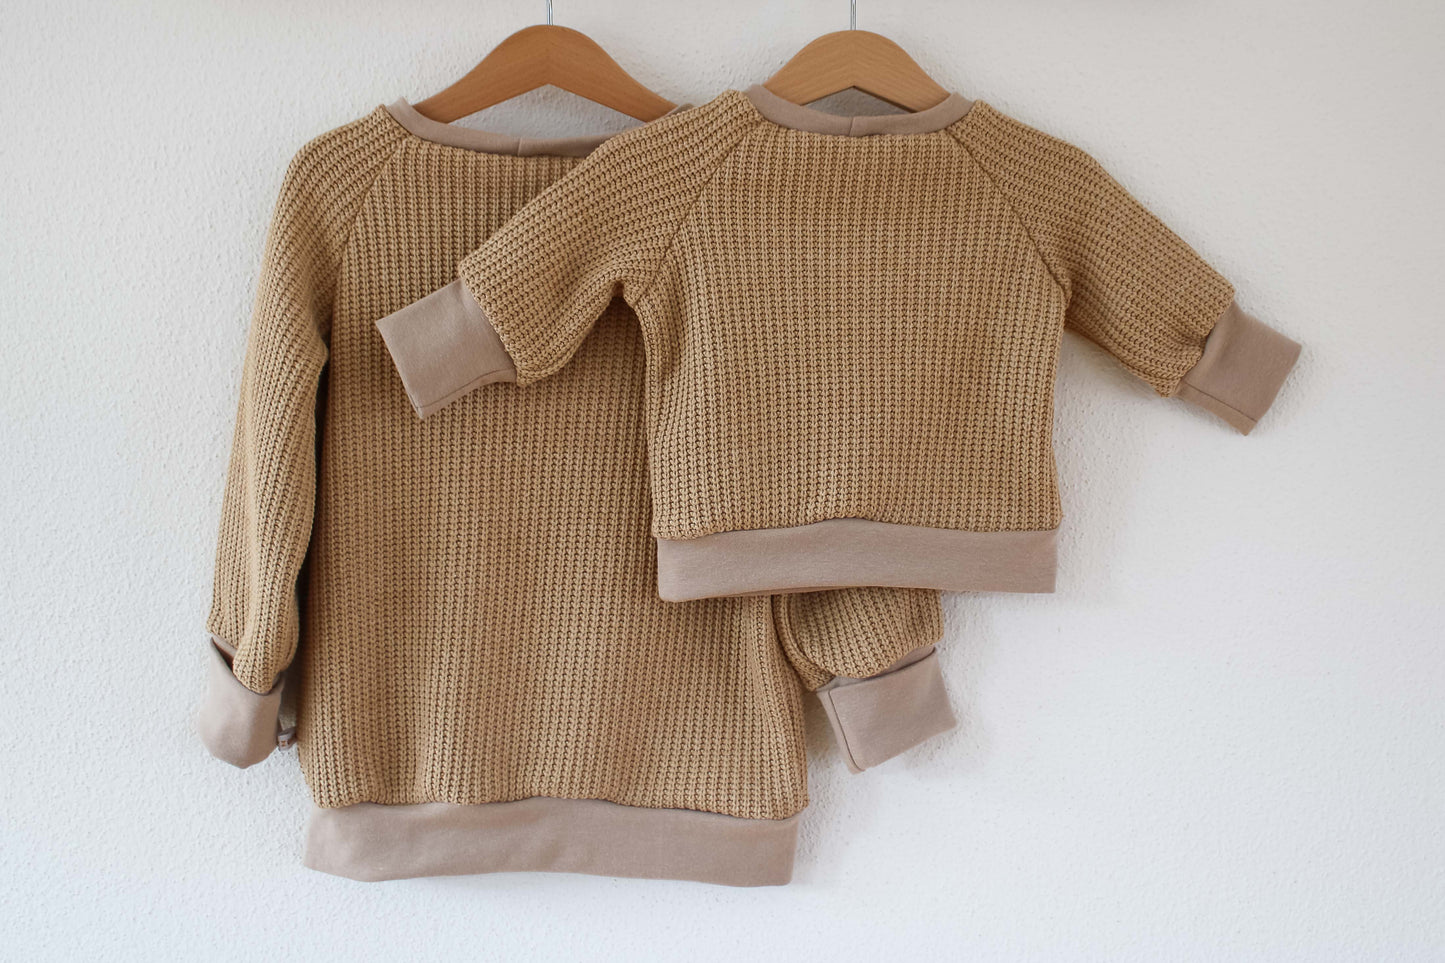 Strick Sweater (Sand)